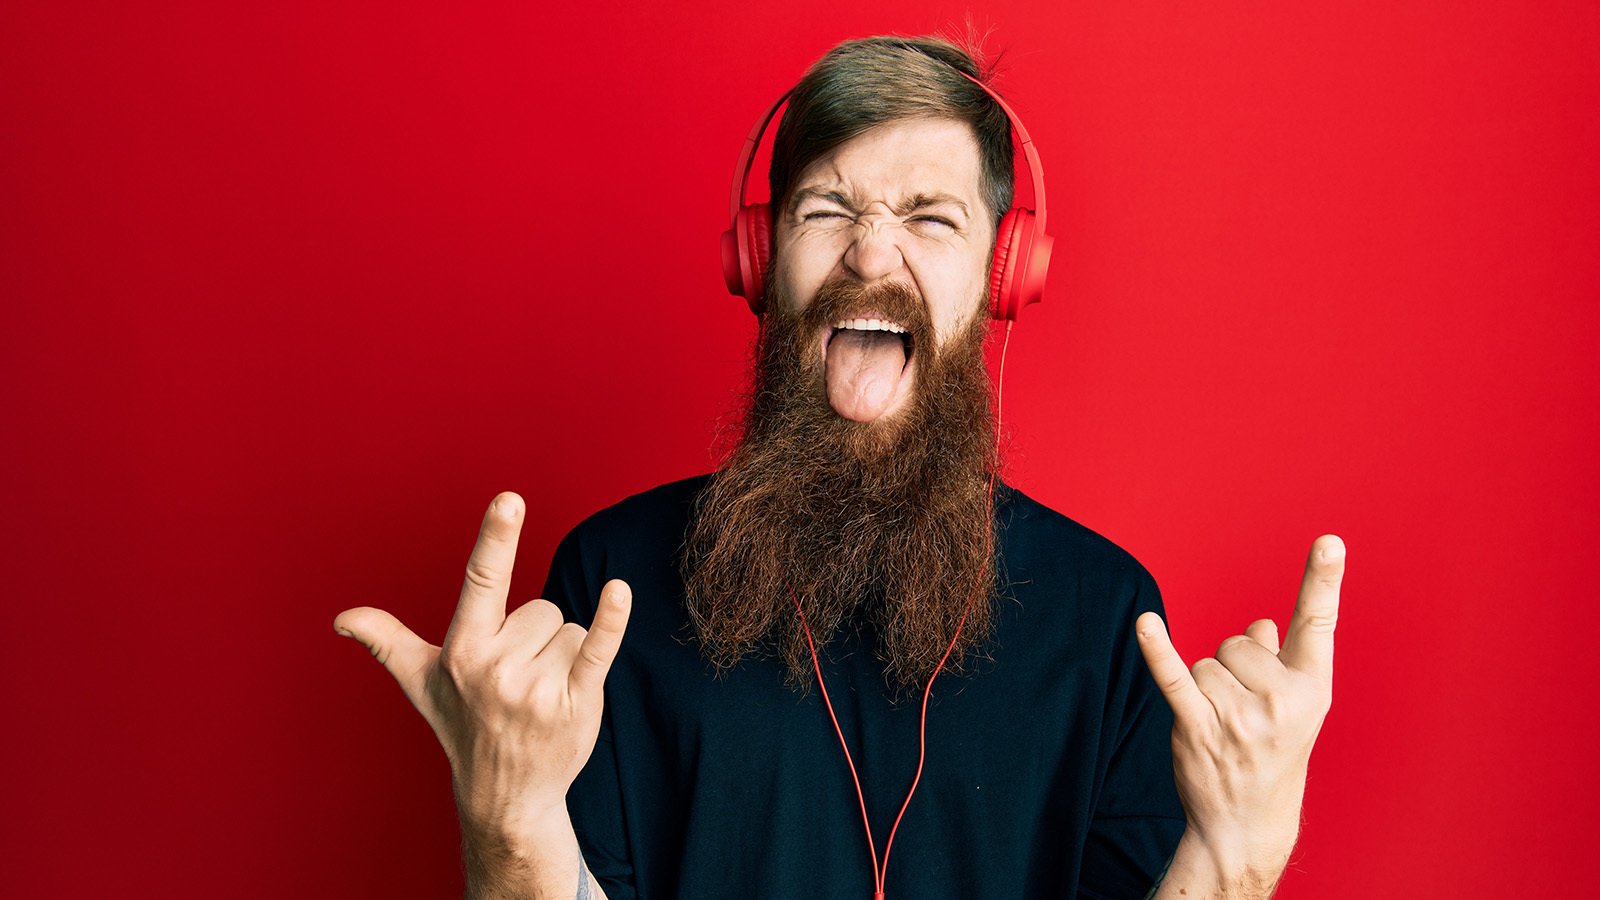 Best Rock and Metal Songs to Test Headphones